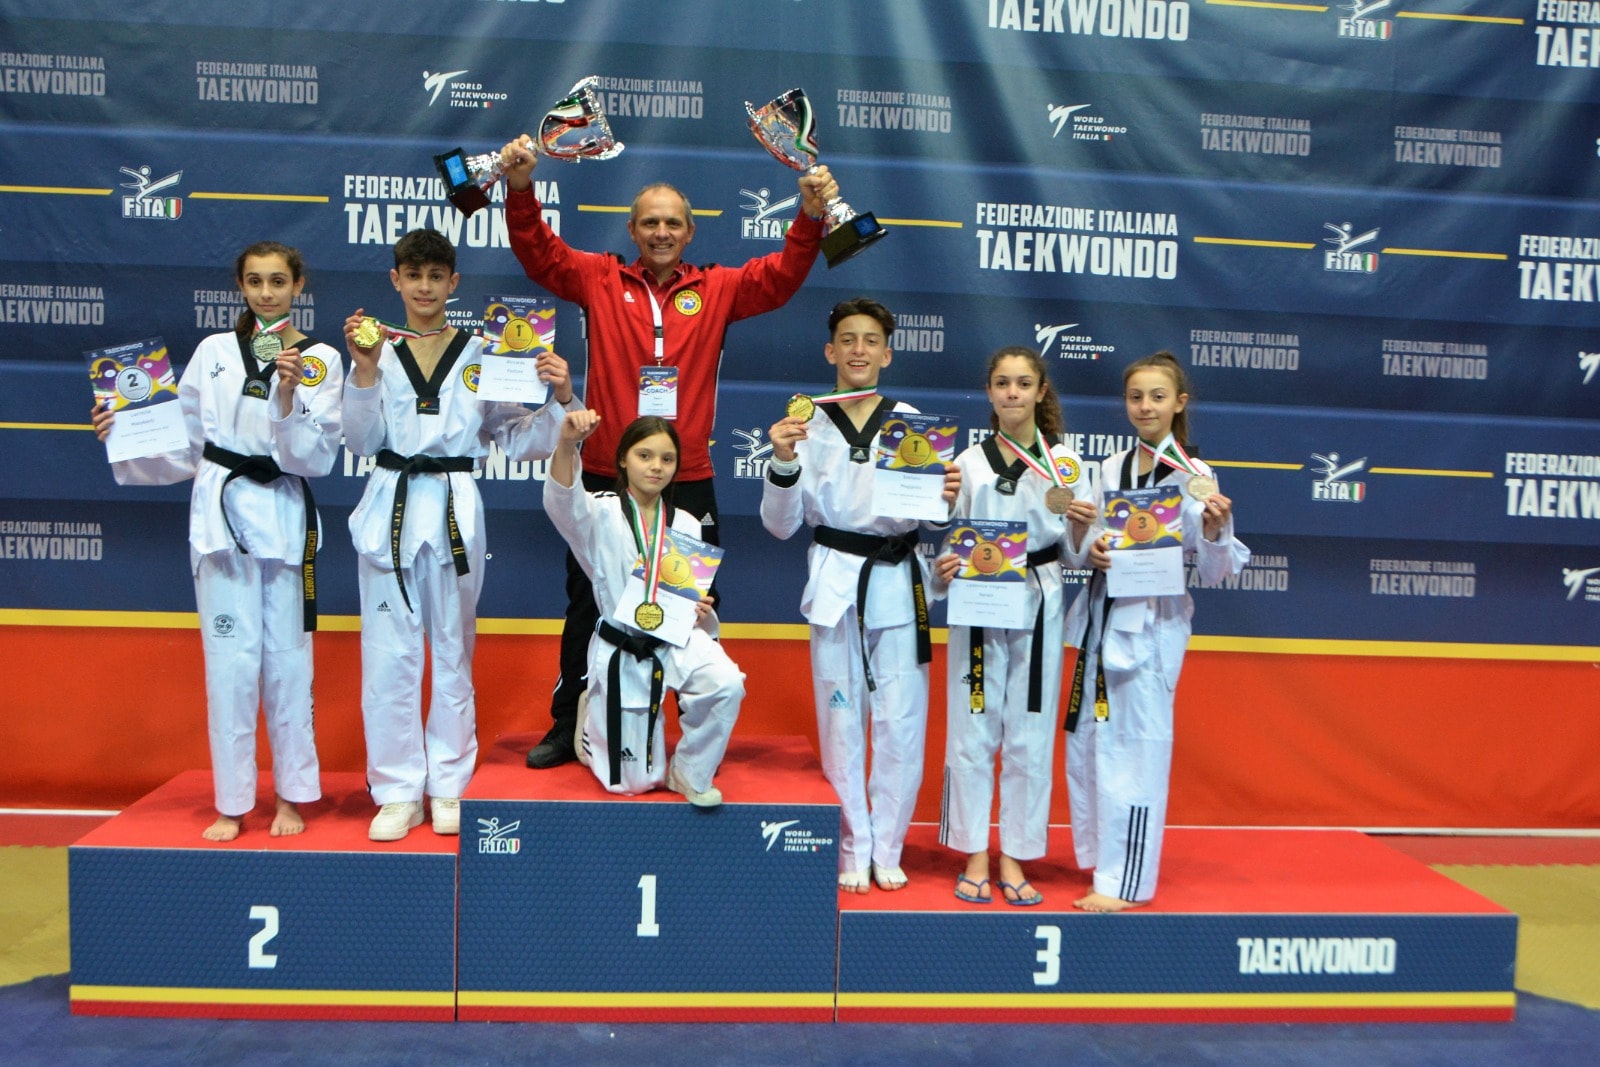 Taekwondo, i talenti under 15 genovesi si laureano campioni d'Italia